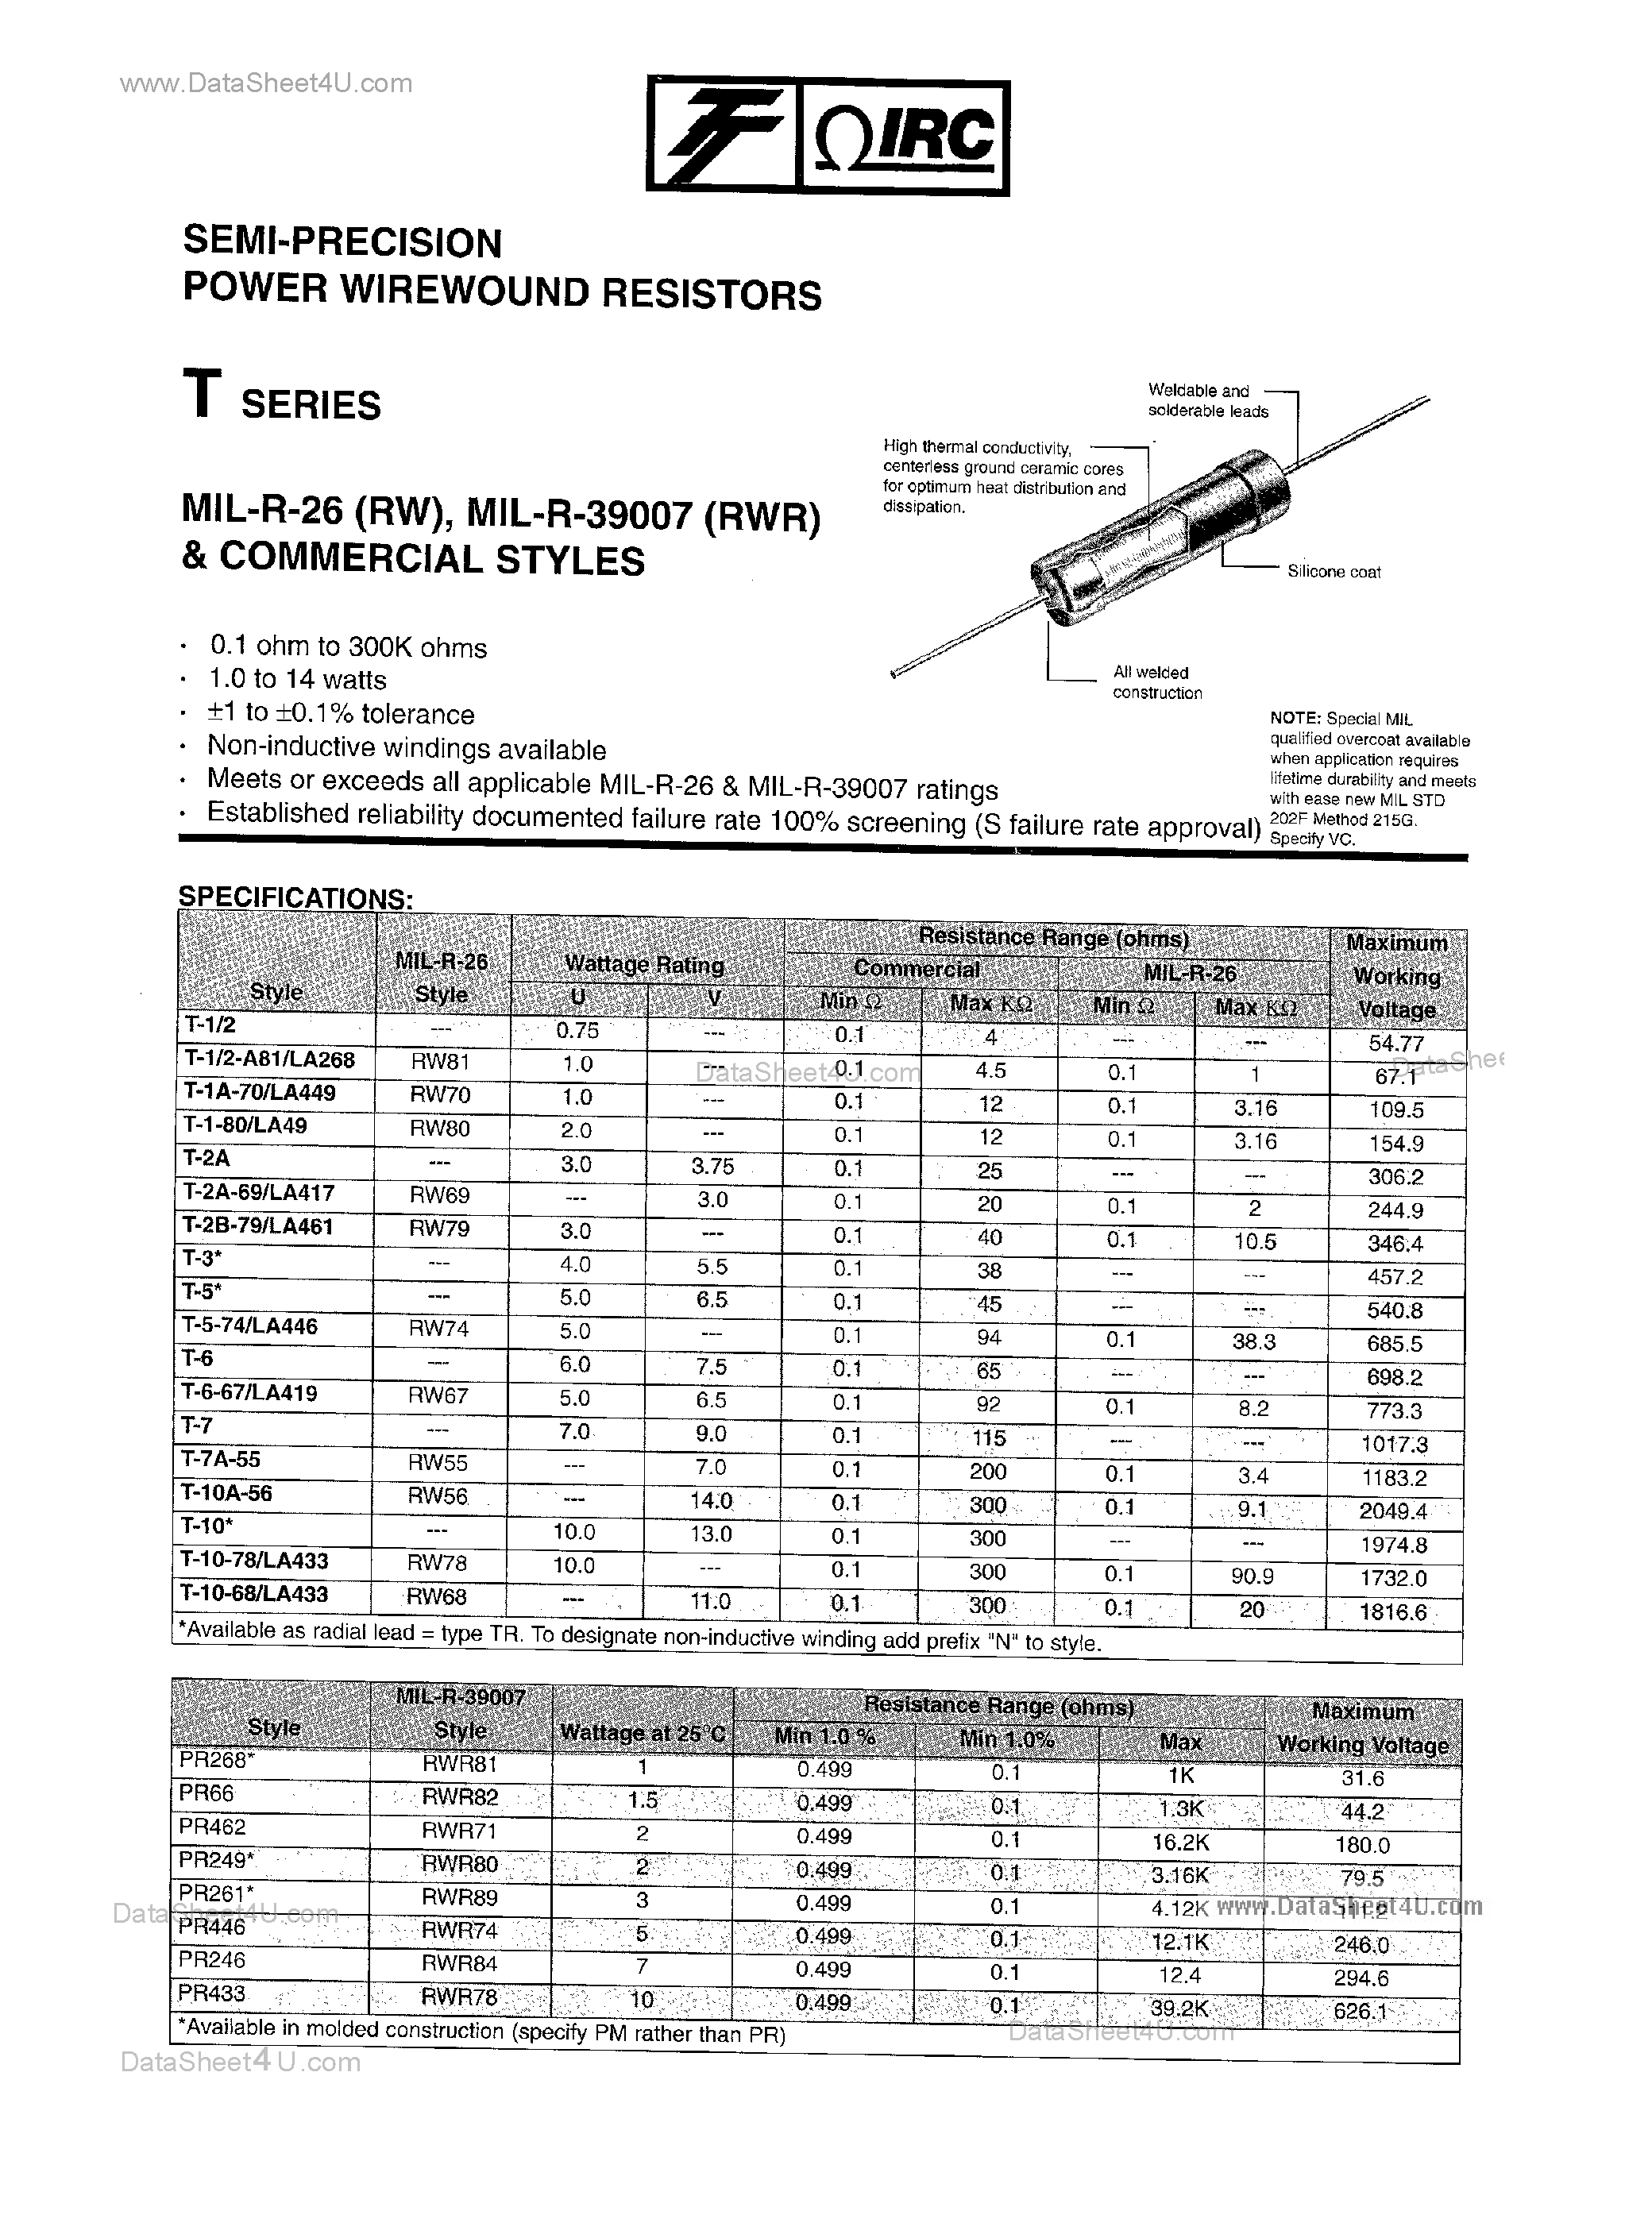 Datasheet RW69V1R0F - (T Series) Power Wirewound Resistors page 1